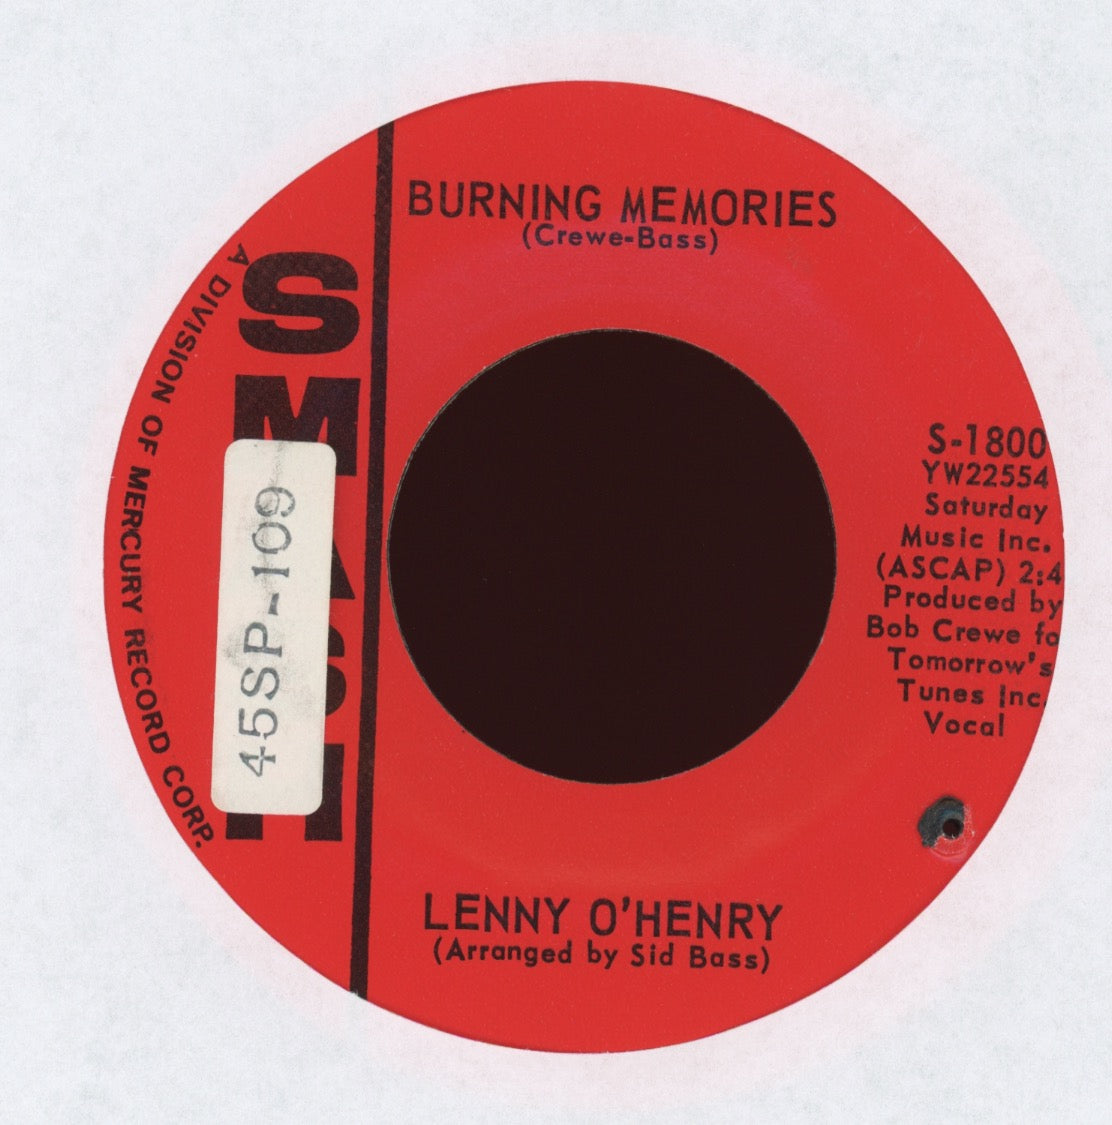 Lenny O'Henry - Mr. Moonlight on Smash